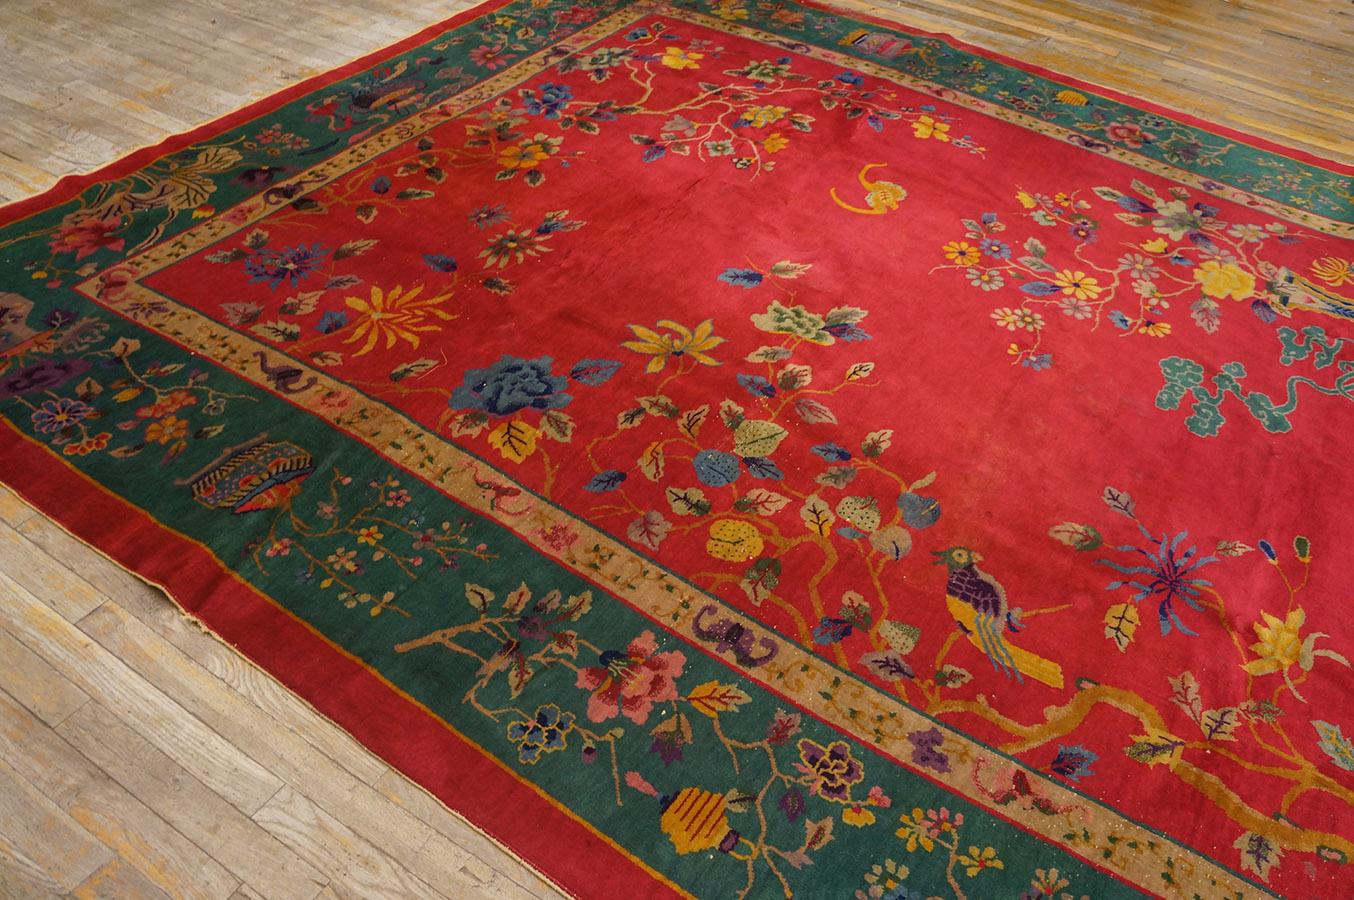 1920s Chinese Art Deco Carpet ( 9' x 11' 8'' - 275 x 355 cm ) For Sale 6